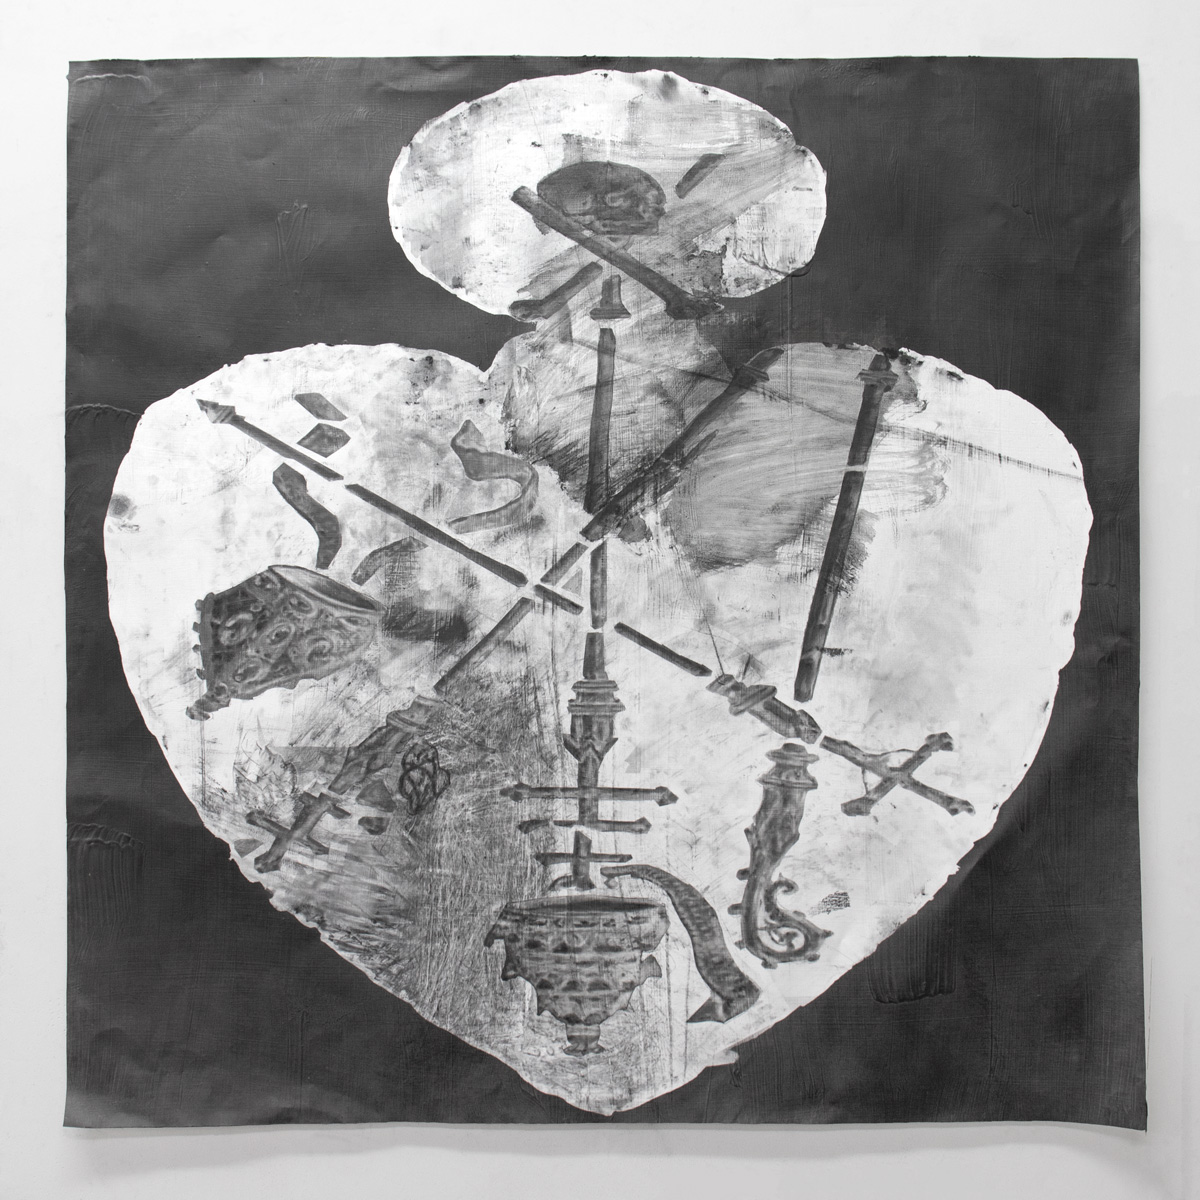 Triunfa la Muerte I. Pencil, graphite and solvent on paper. 100cm x 100cm, 2019